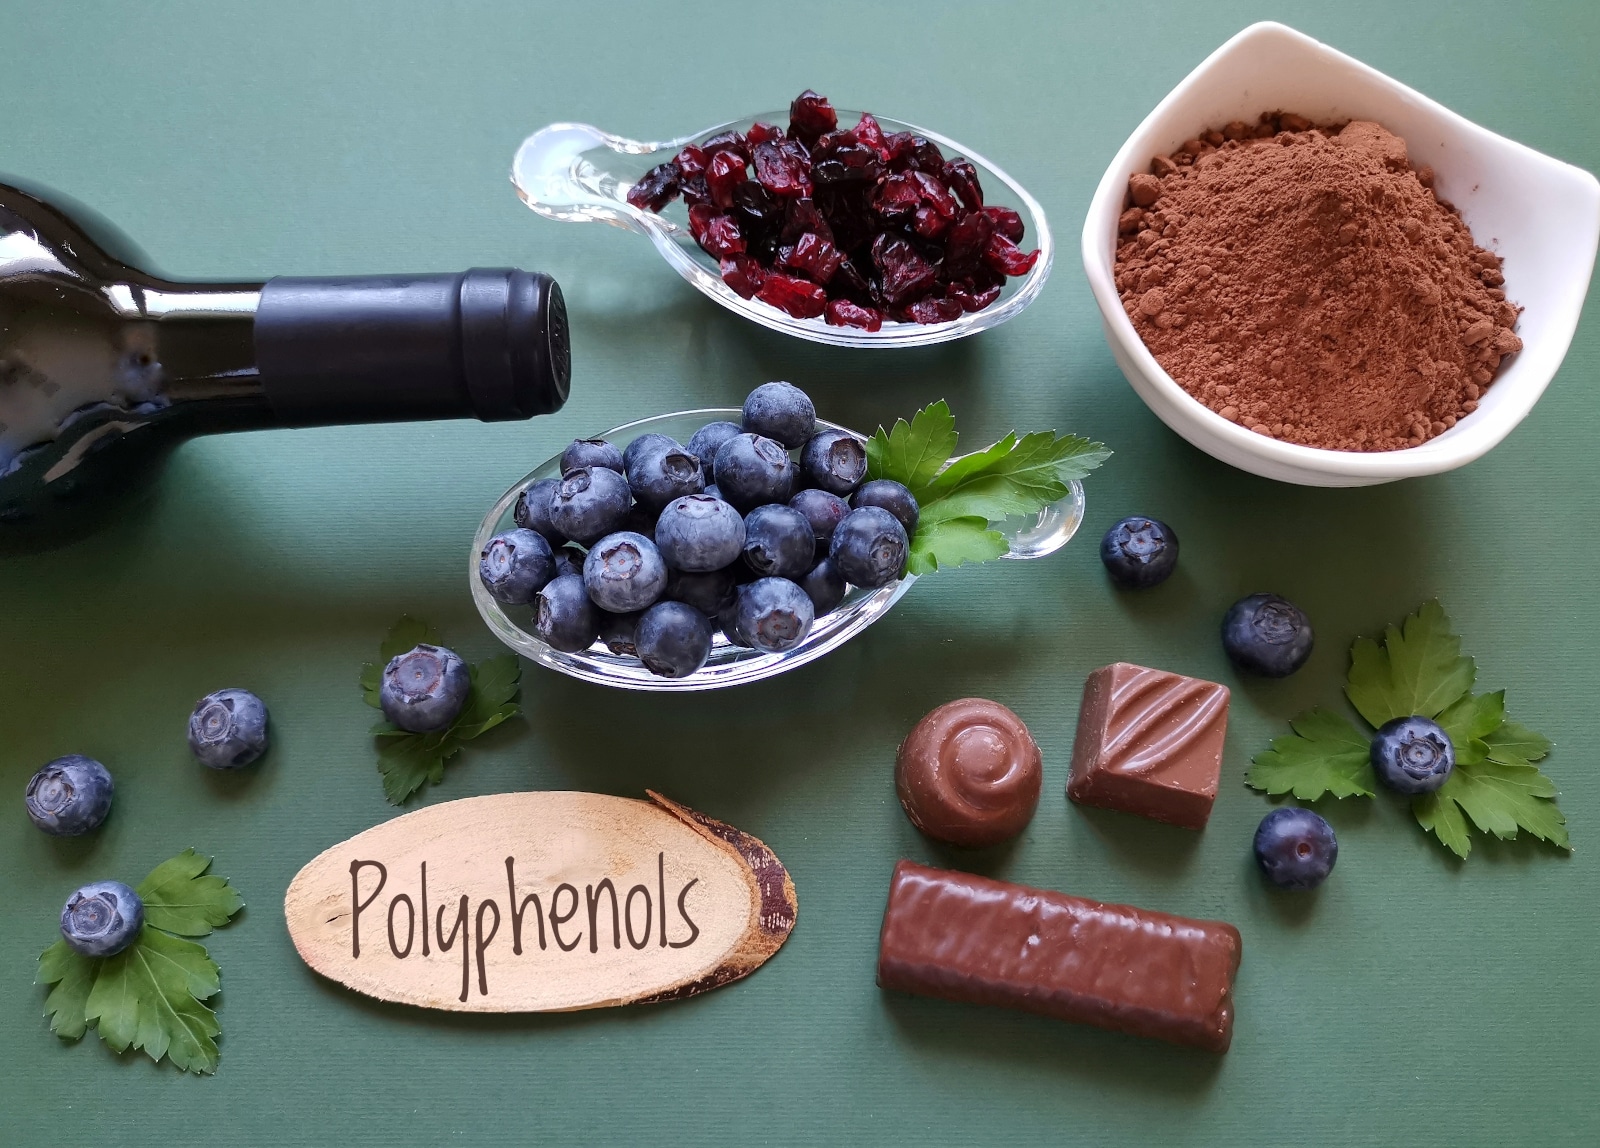 Polyphenols